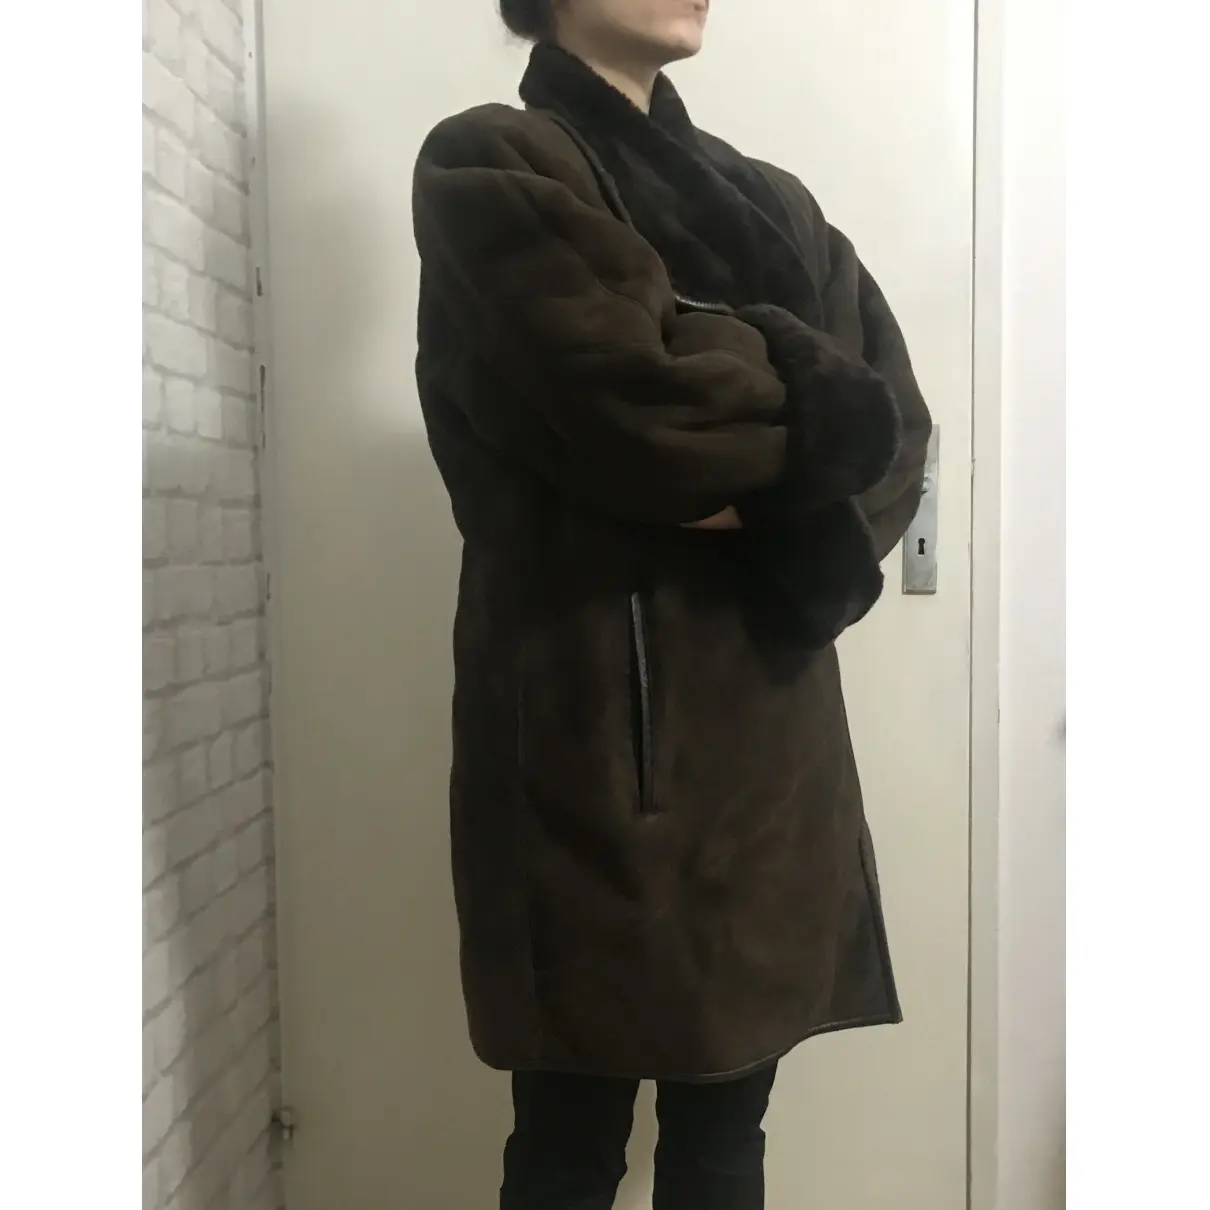 Buy Sprung Frères Leather coat online